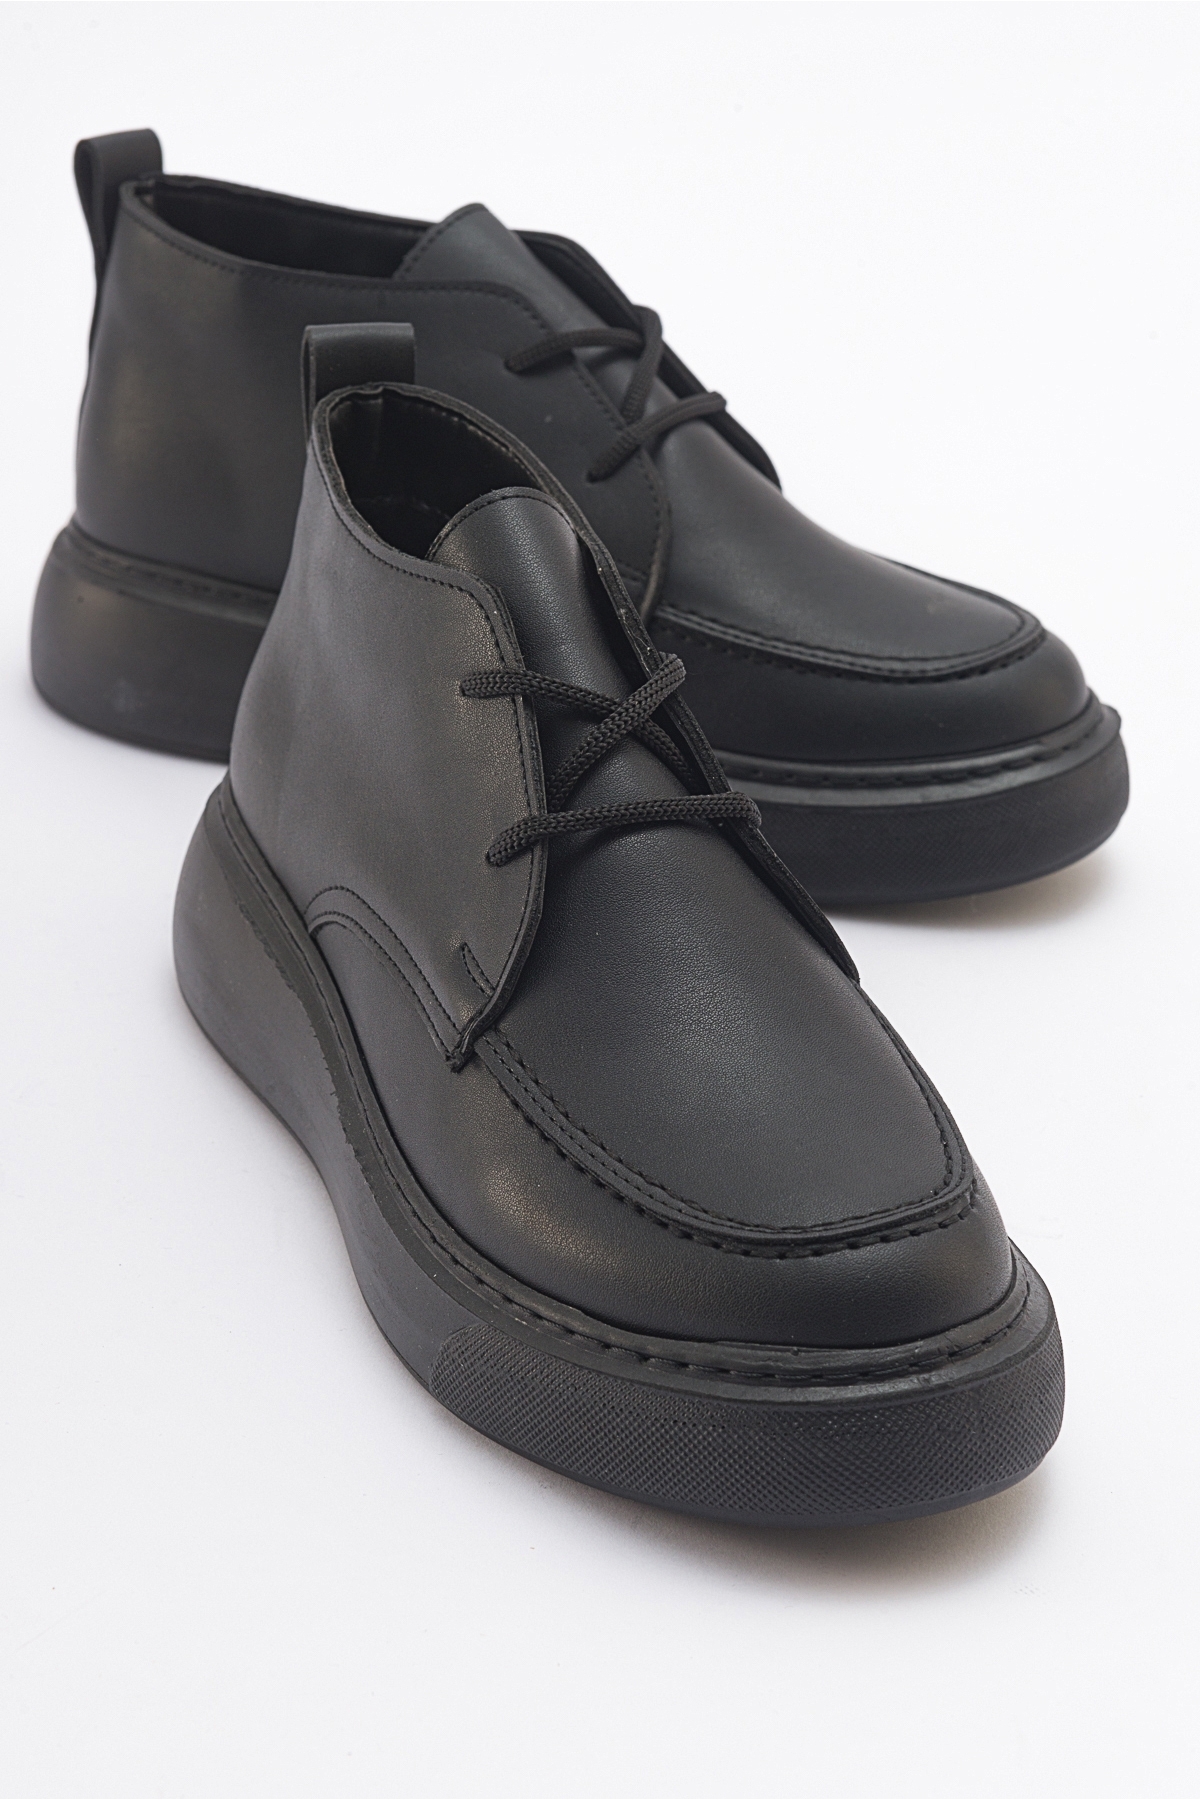 LuviShoes VALVE Black Skin Women's Boots